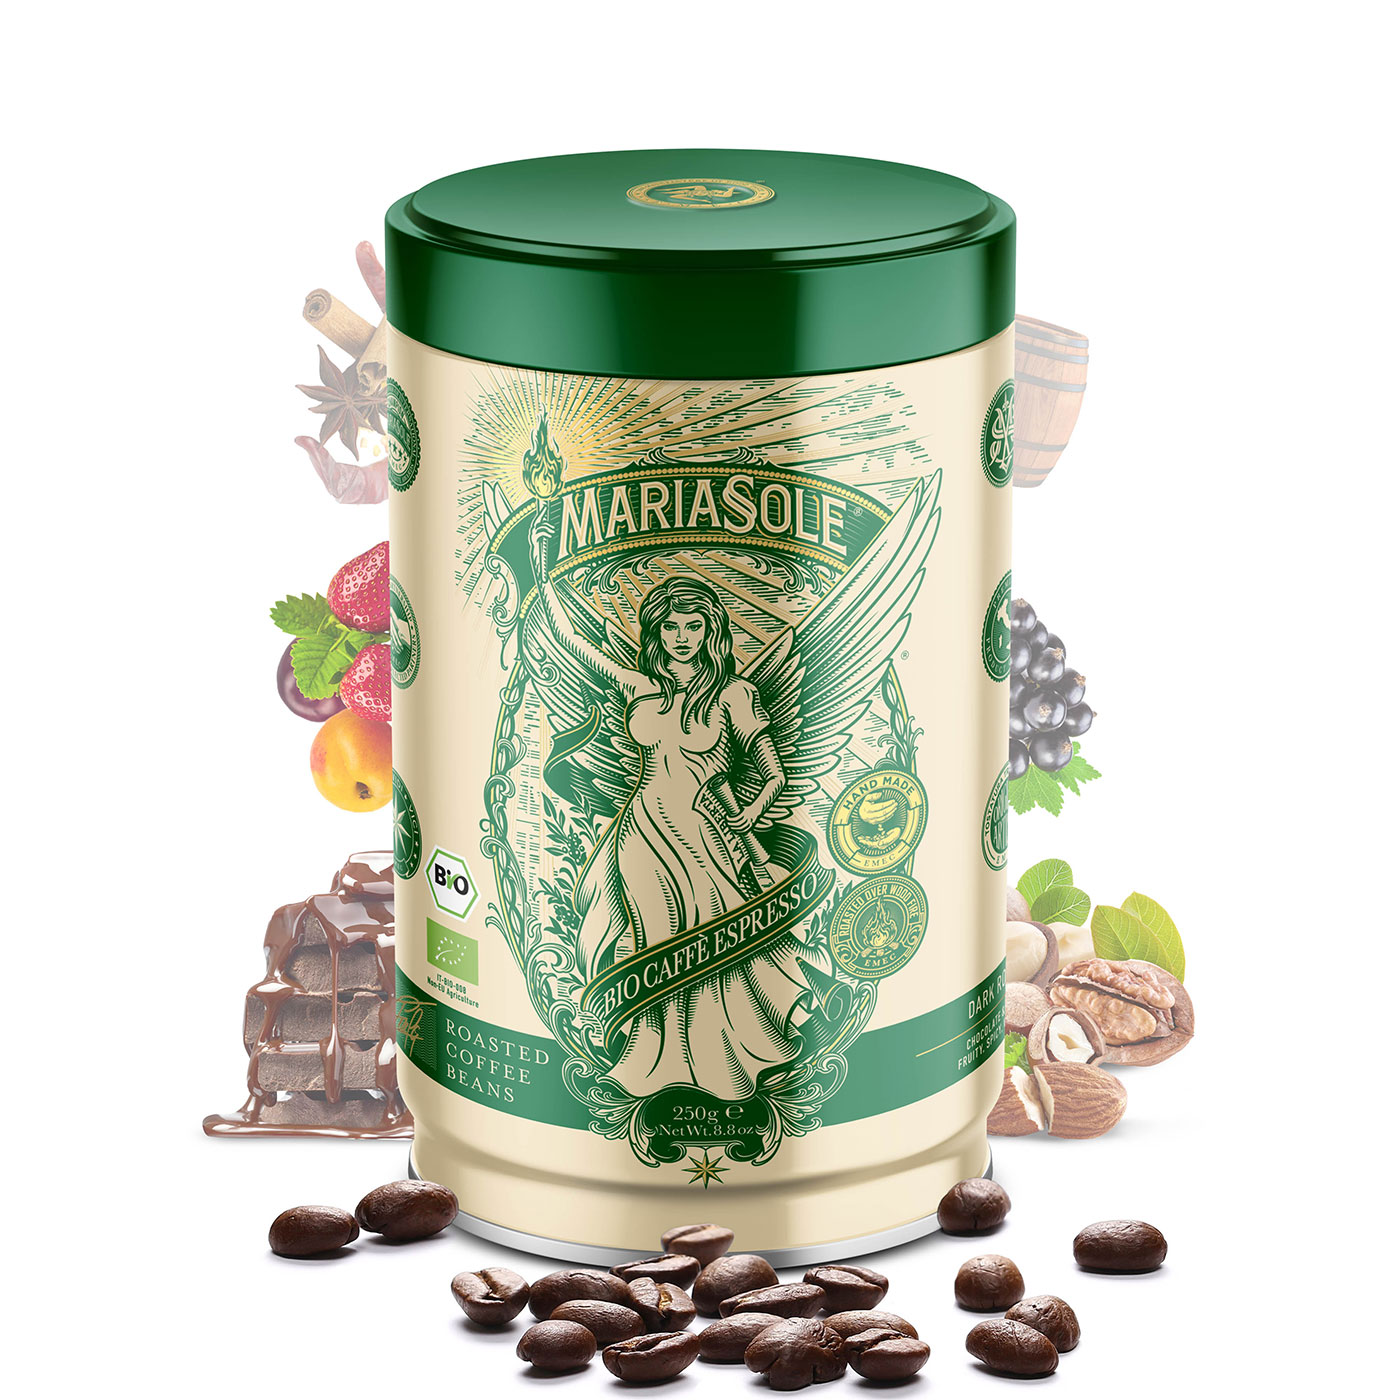 MARIASOLE - ORGANIC Caffè Espresso - 250g - Beans